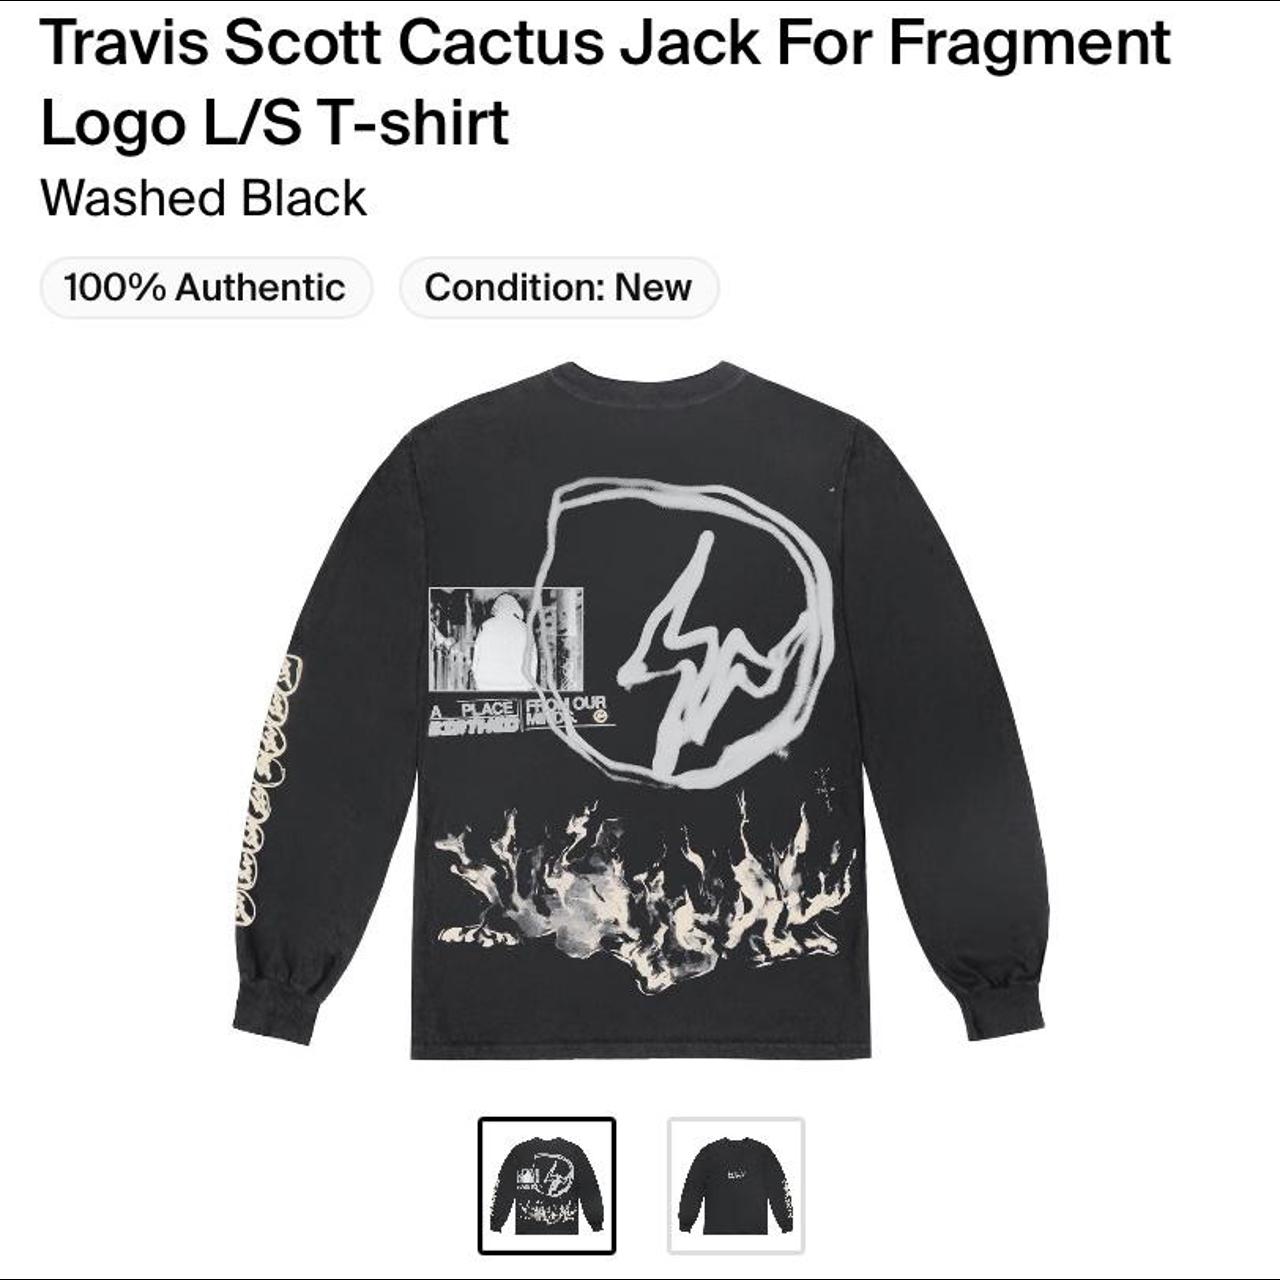 Cactus Jack by Travis Scott for Fragment Logo Long-Sleeve